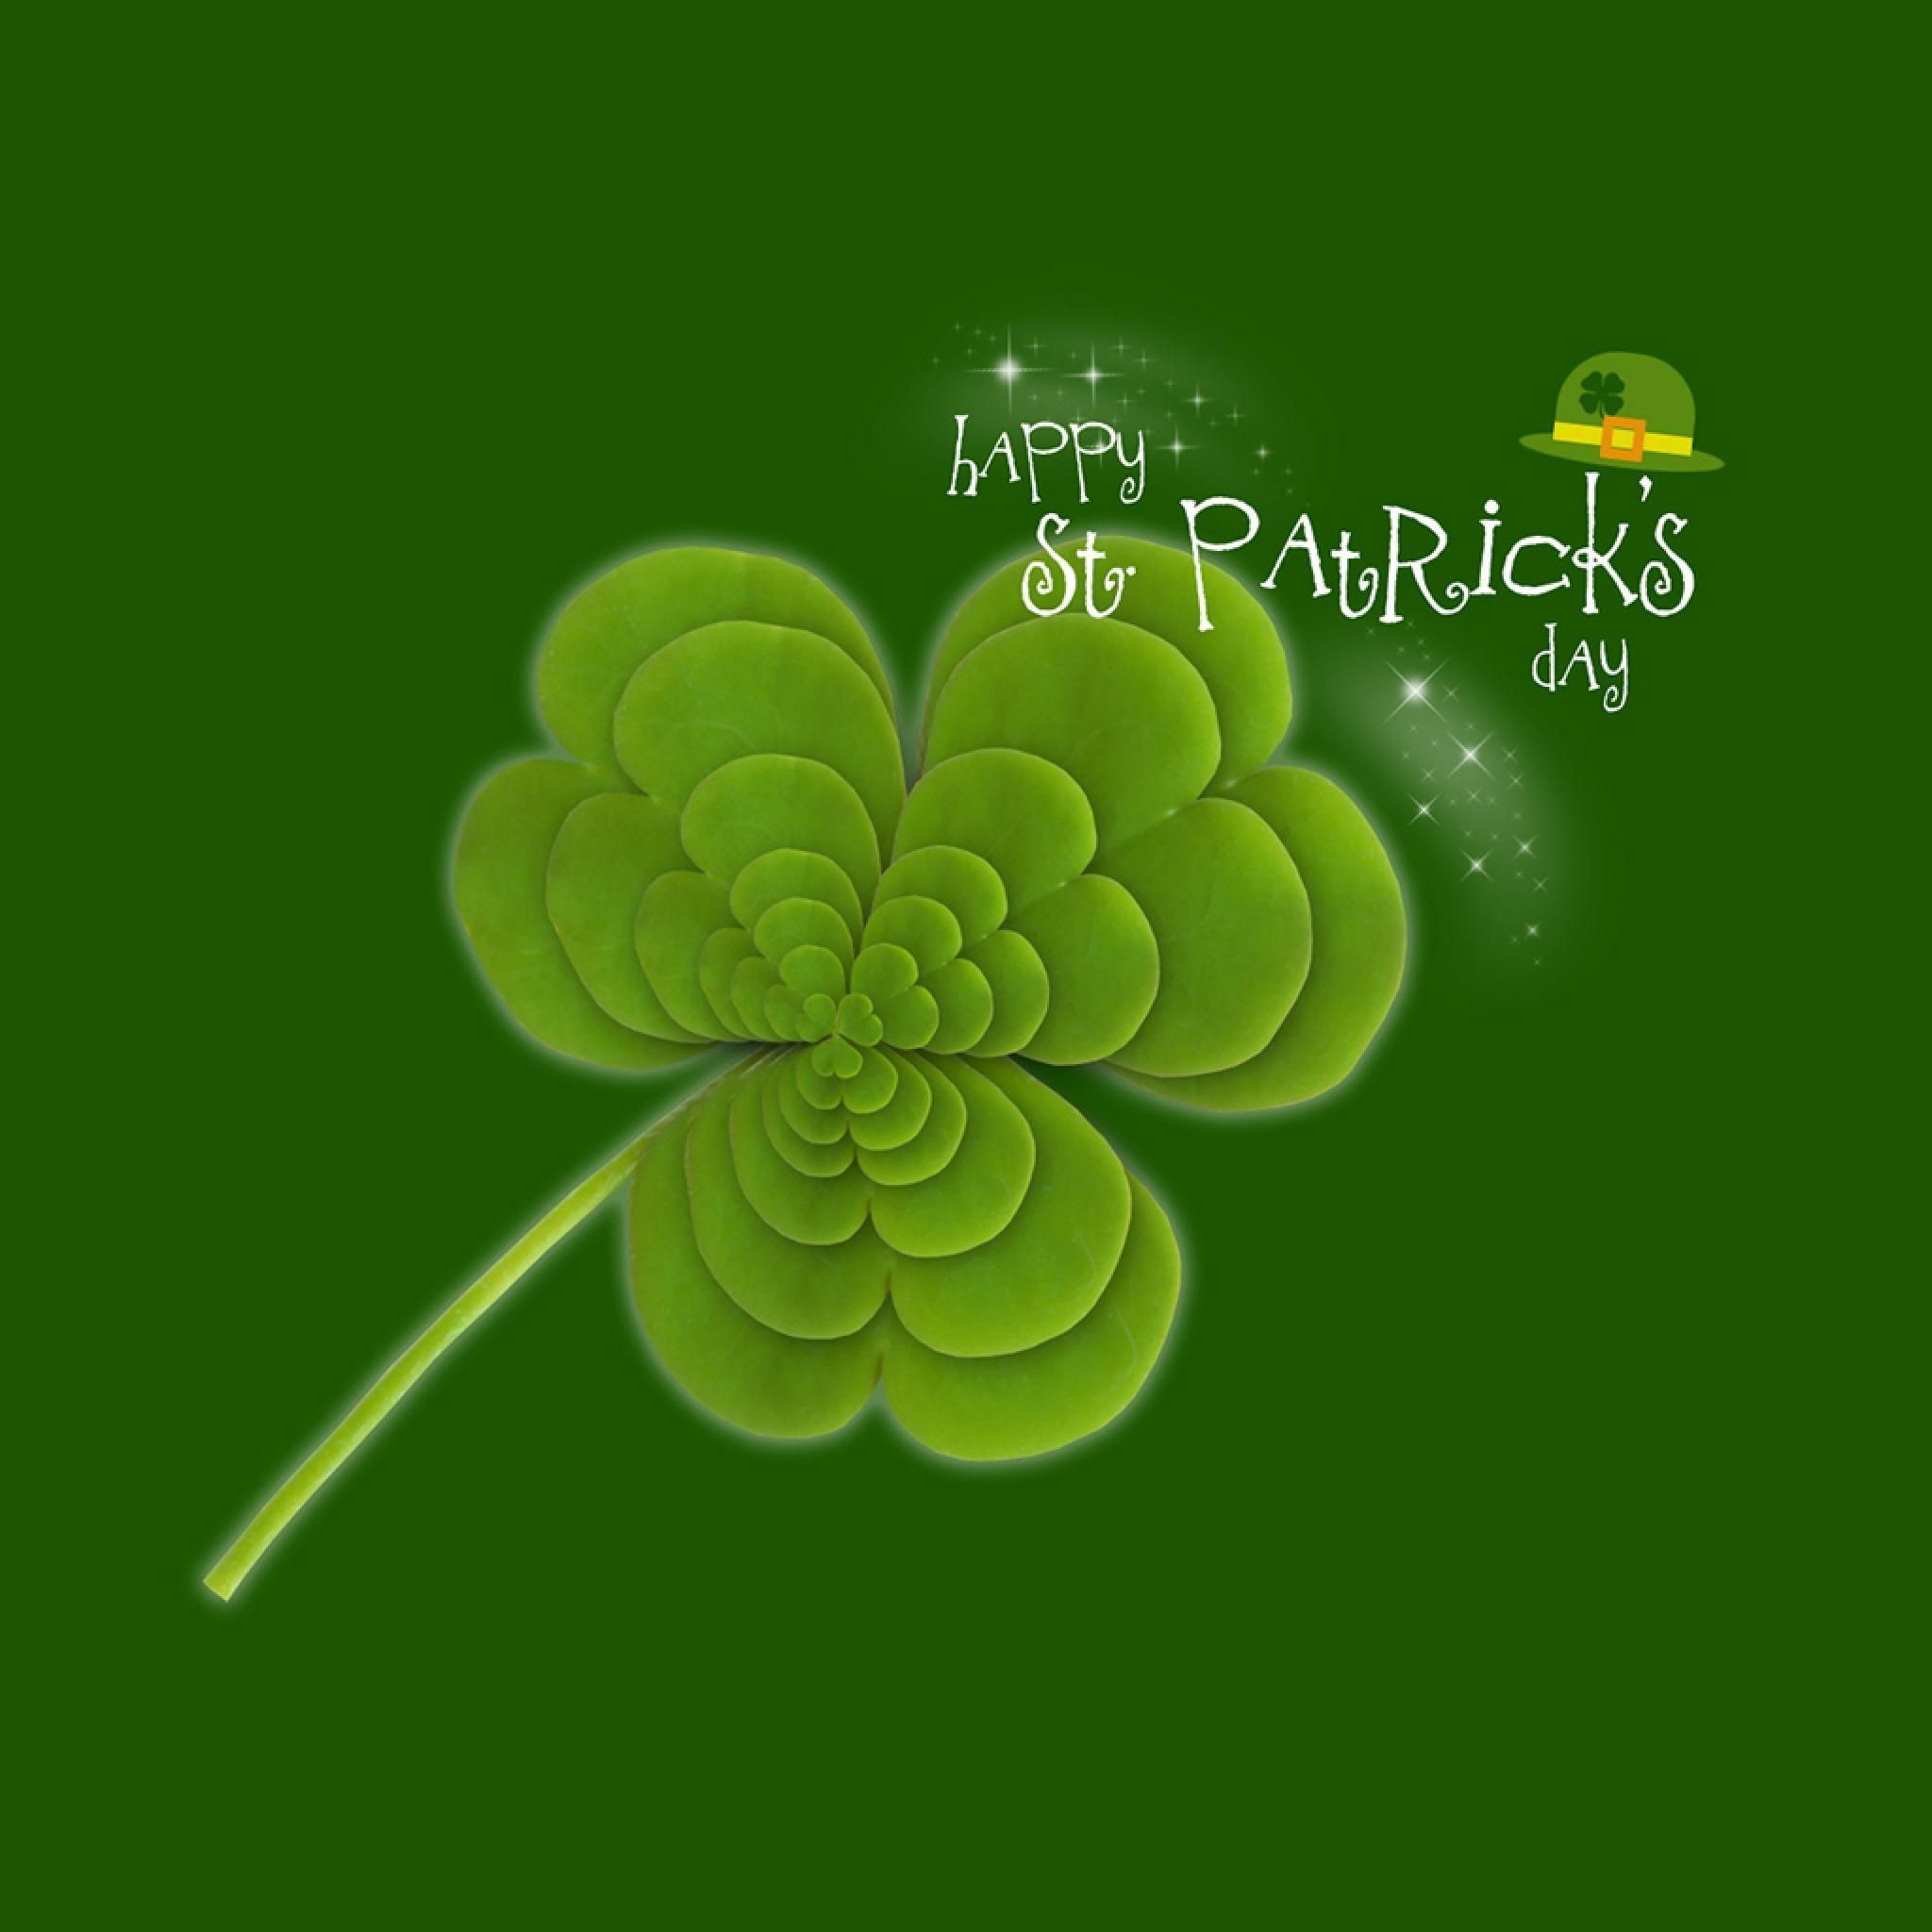 St Patrick's Day iPhone 5 Wallpaper. Happy Saint Patricks Day. St